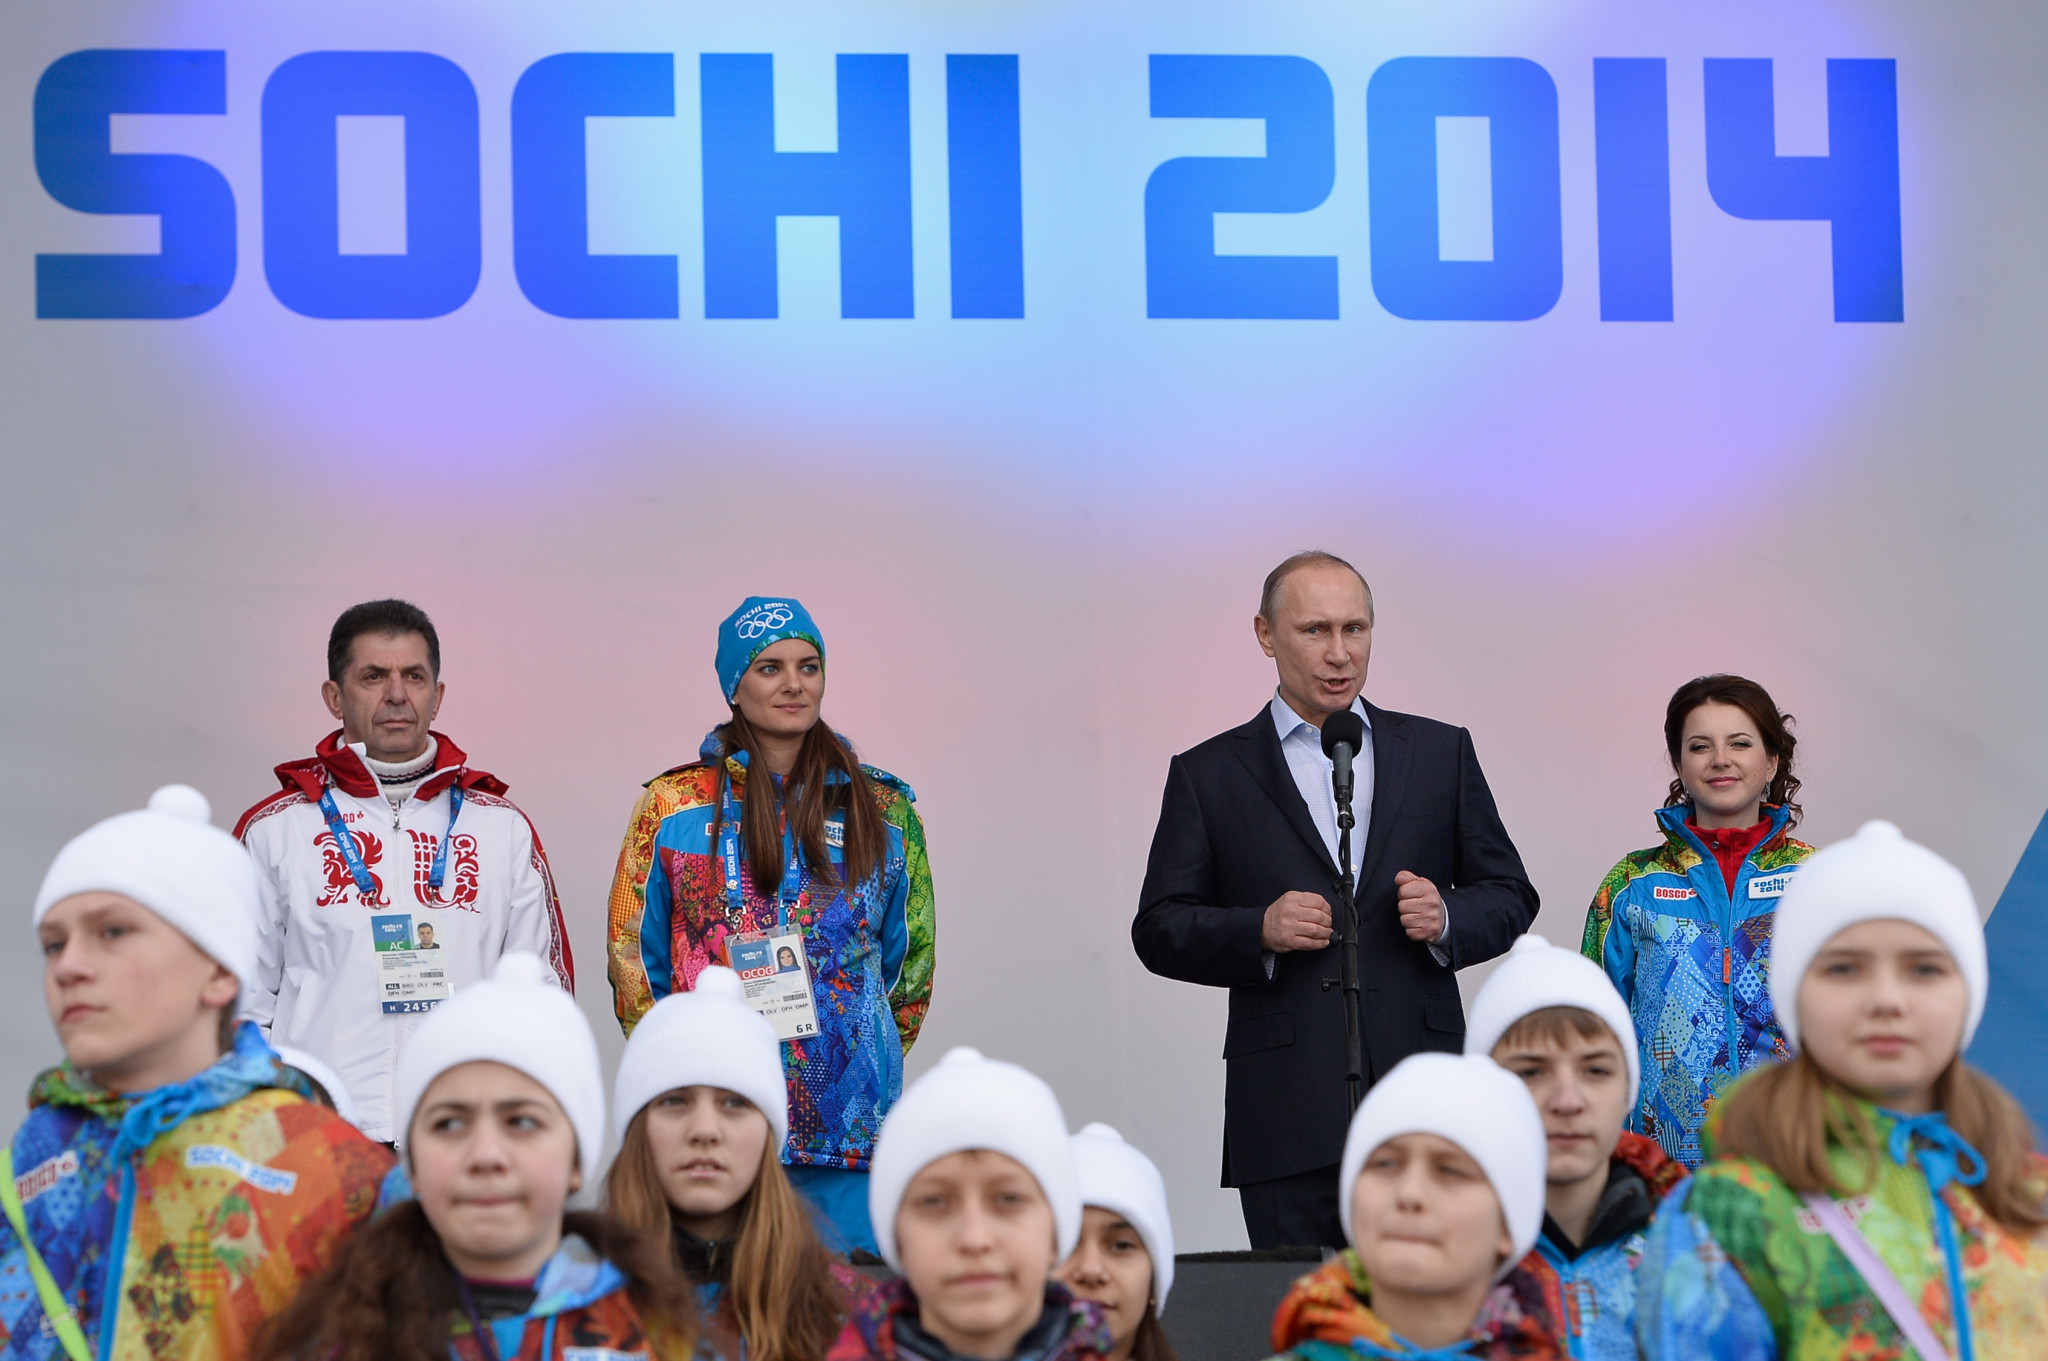 Alexander Kravtsov served as Russia's Chef de Mission at Sochi 2014 ©Getty Images